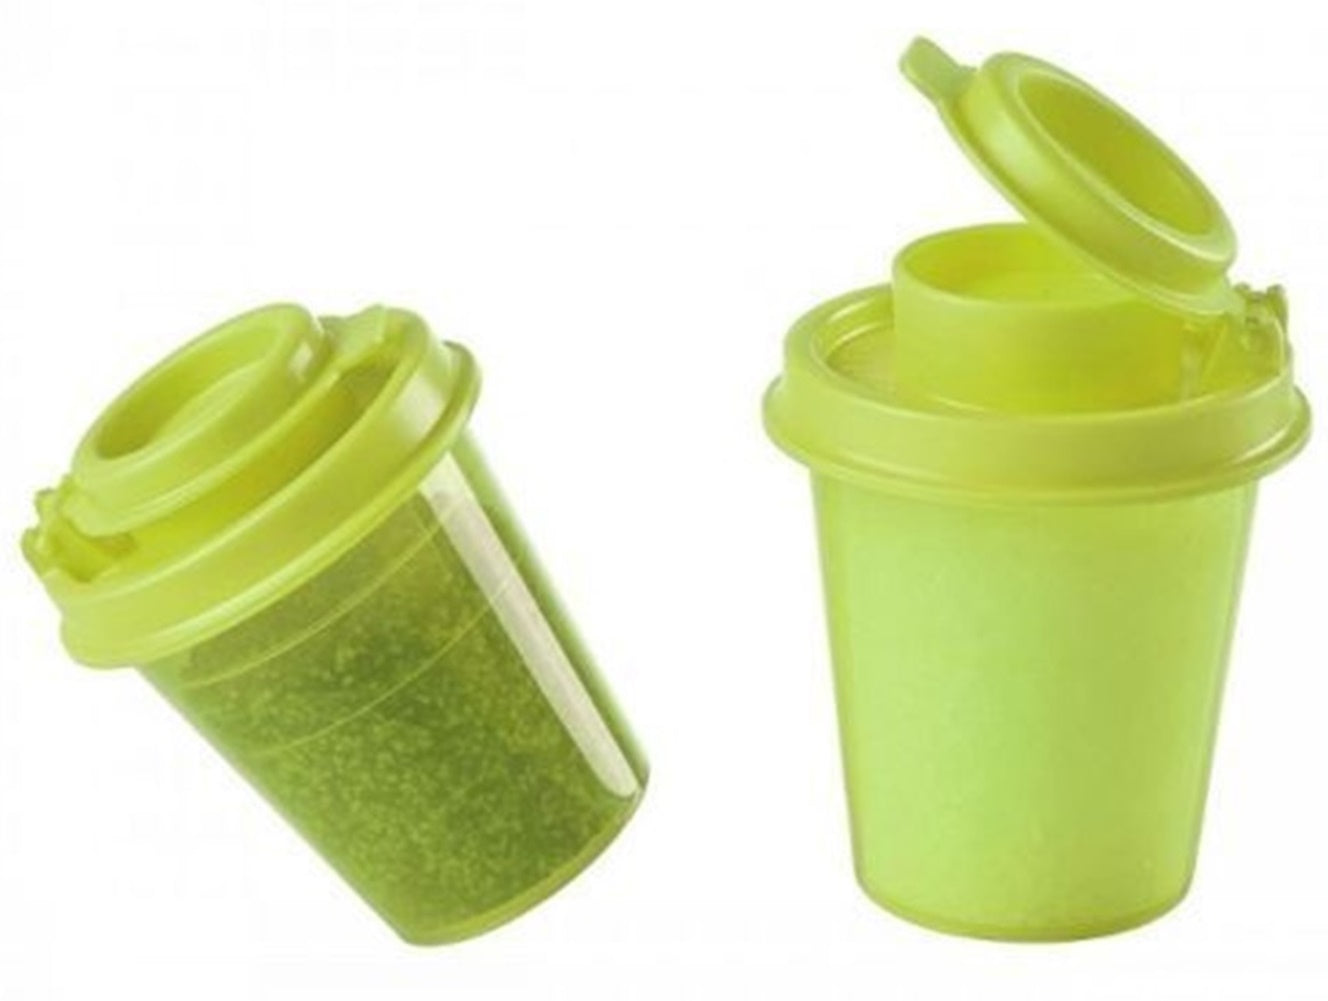 Tupperware Mini Tupper Salt & Pepper Shakers Midgets Set of 2 Green and Red  New